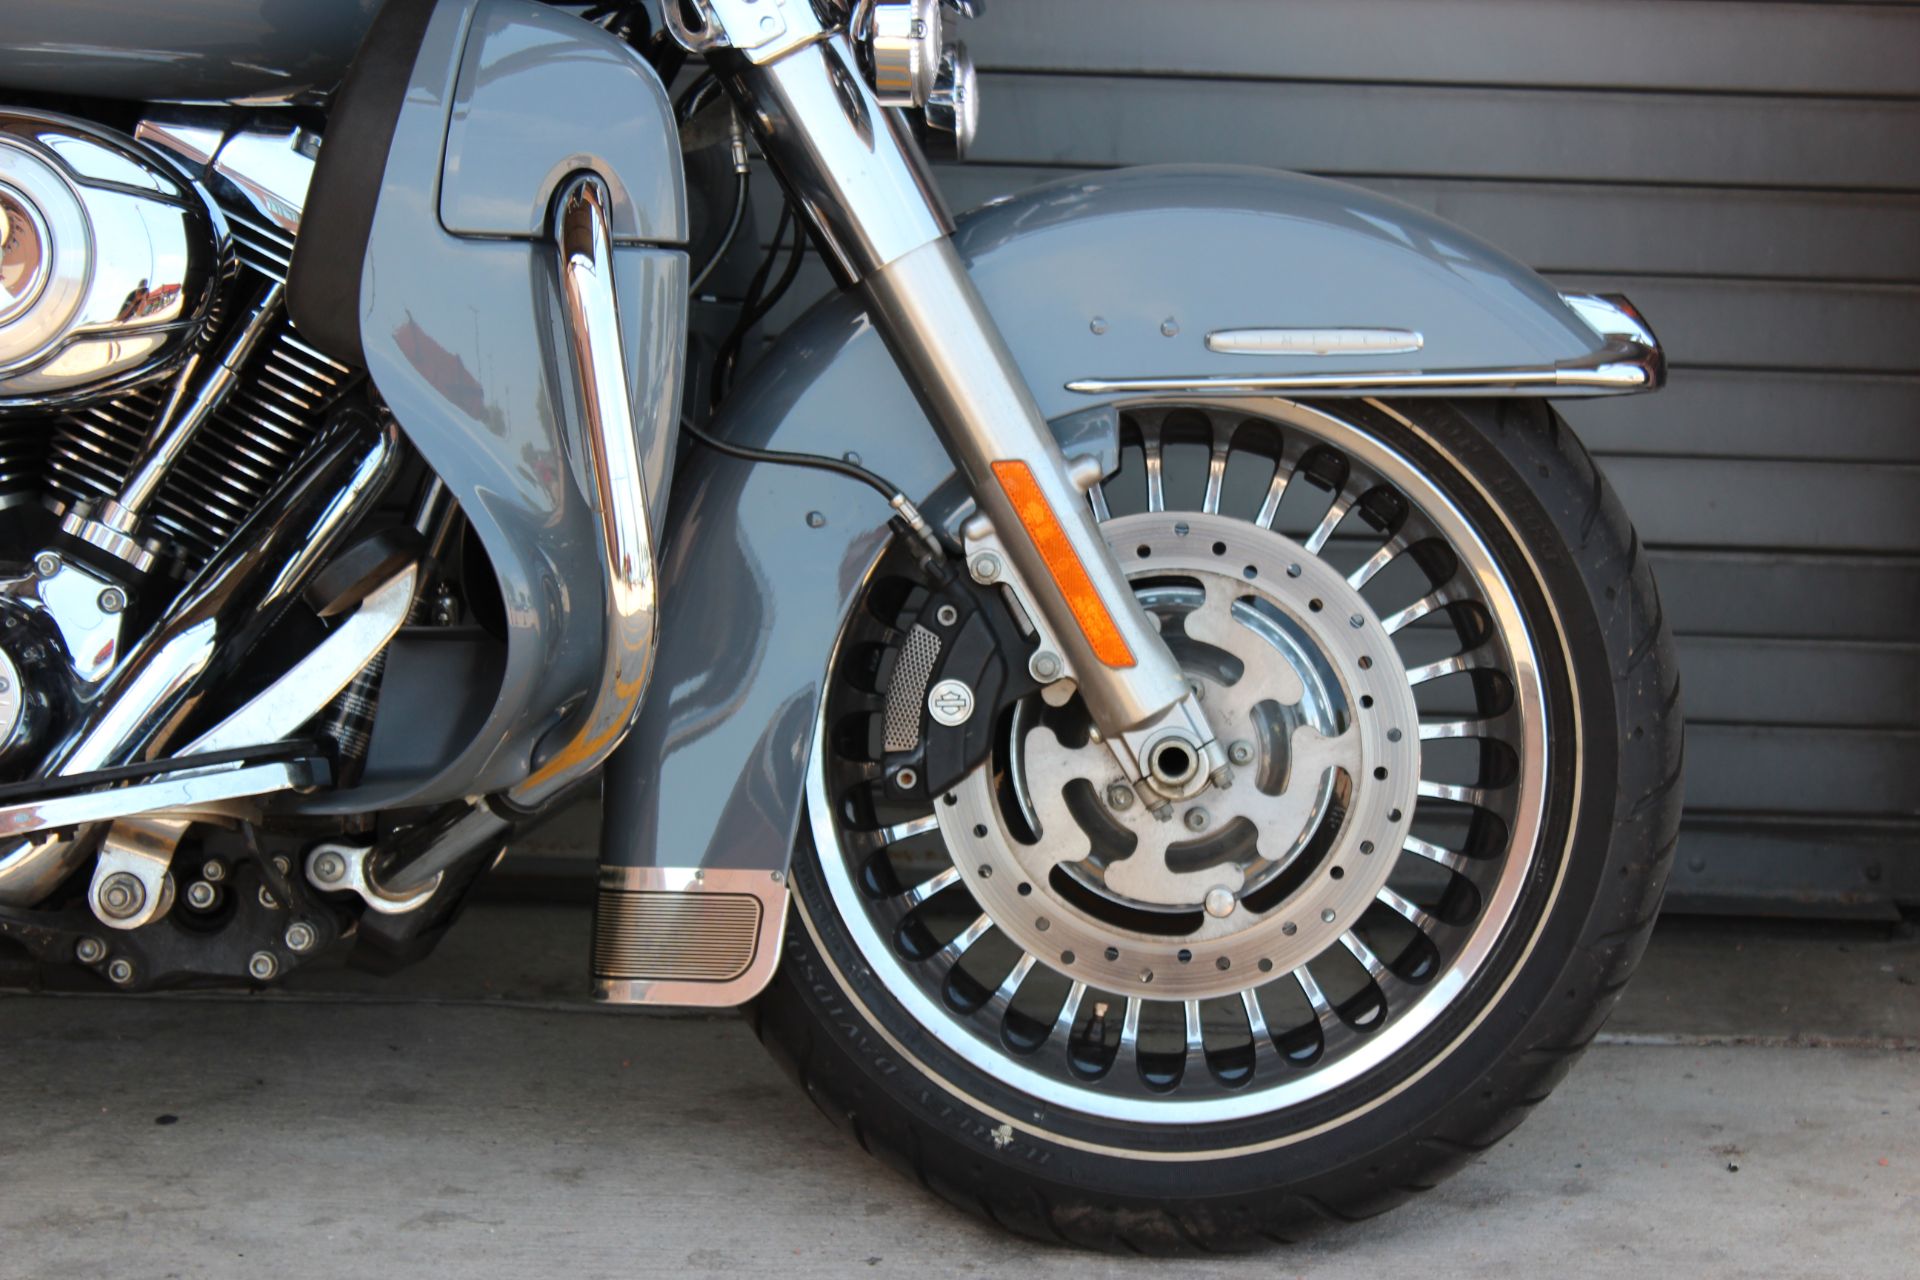 2013 Harley-Davidson Electra Glide® Ultra Limited in Carrollton, Texas - Photo 4